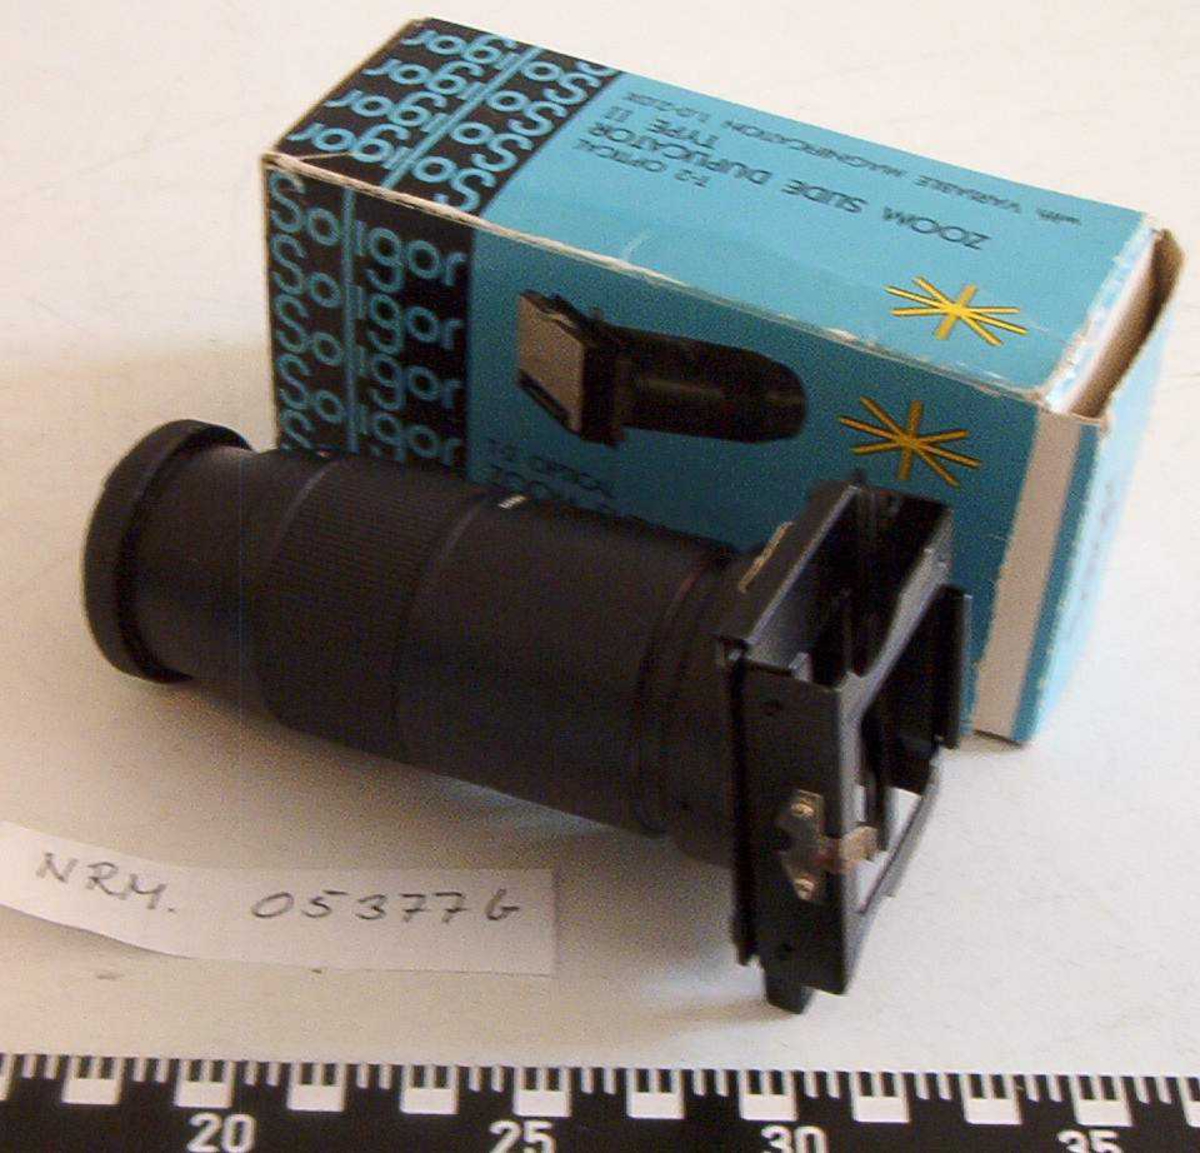 NRM.05377a - Optical slides dublicator  
NRM.05377b - T-2 Optical slides dublicator 